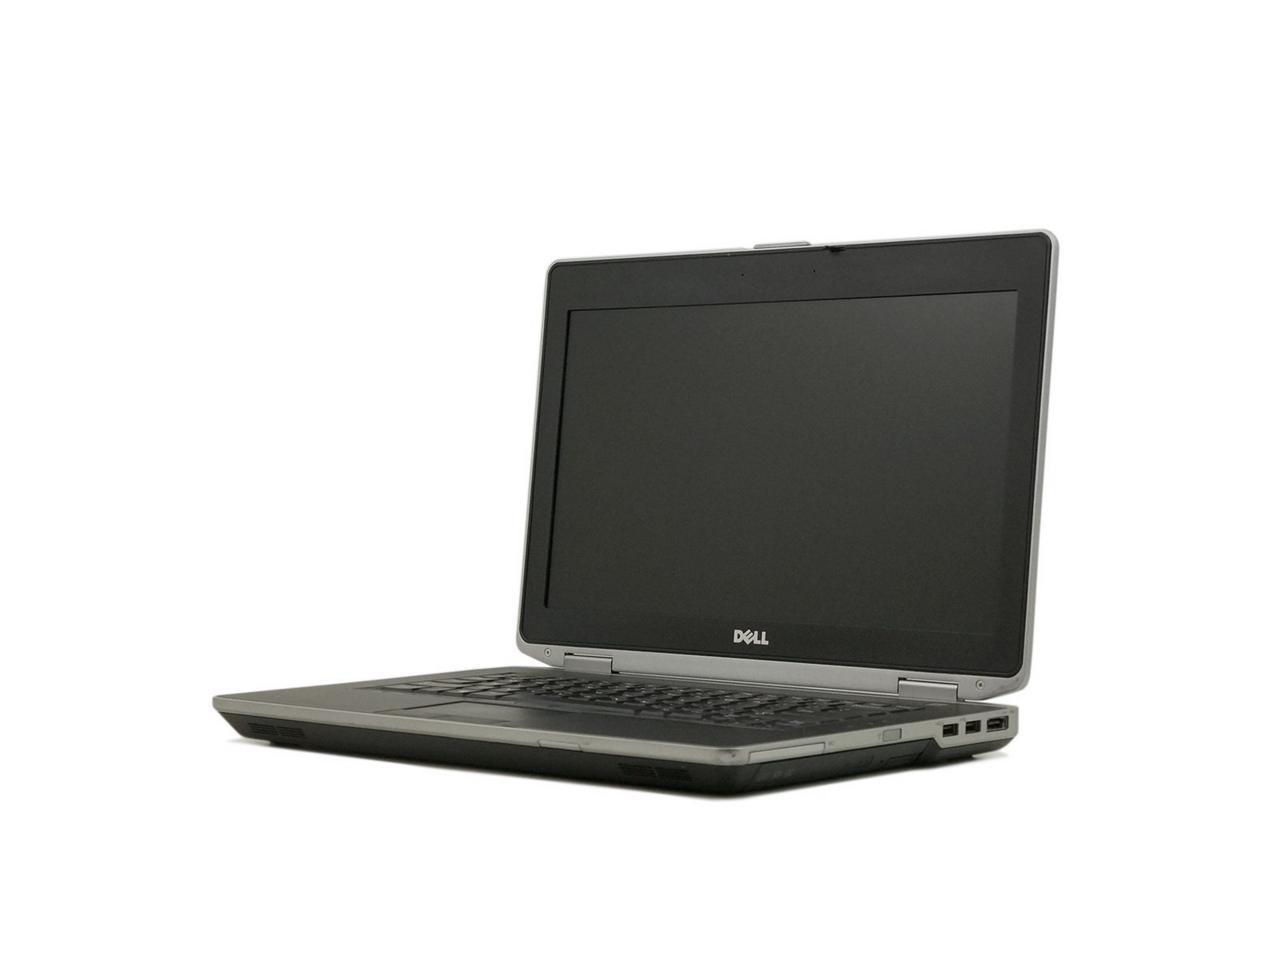 Dell Latitude E6430 Laptop Computer, 2.50 GHz Intel i7 Dual Core Gen 3, 4GB DDR3 RAM, 128GB SSD Hard Drive, Windows 10 Home 64 Bit, 14" Screen (Grade B)